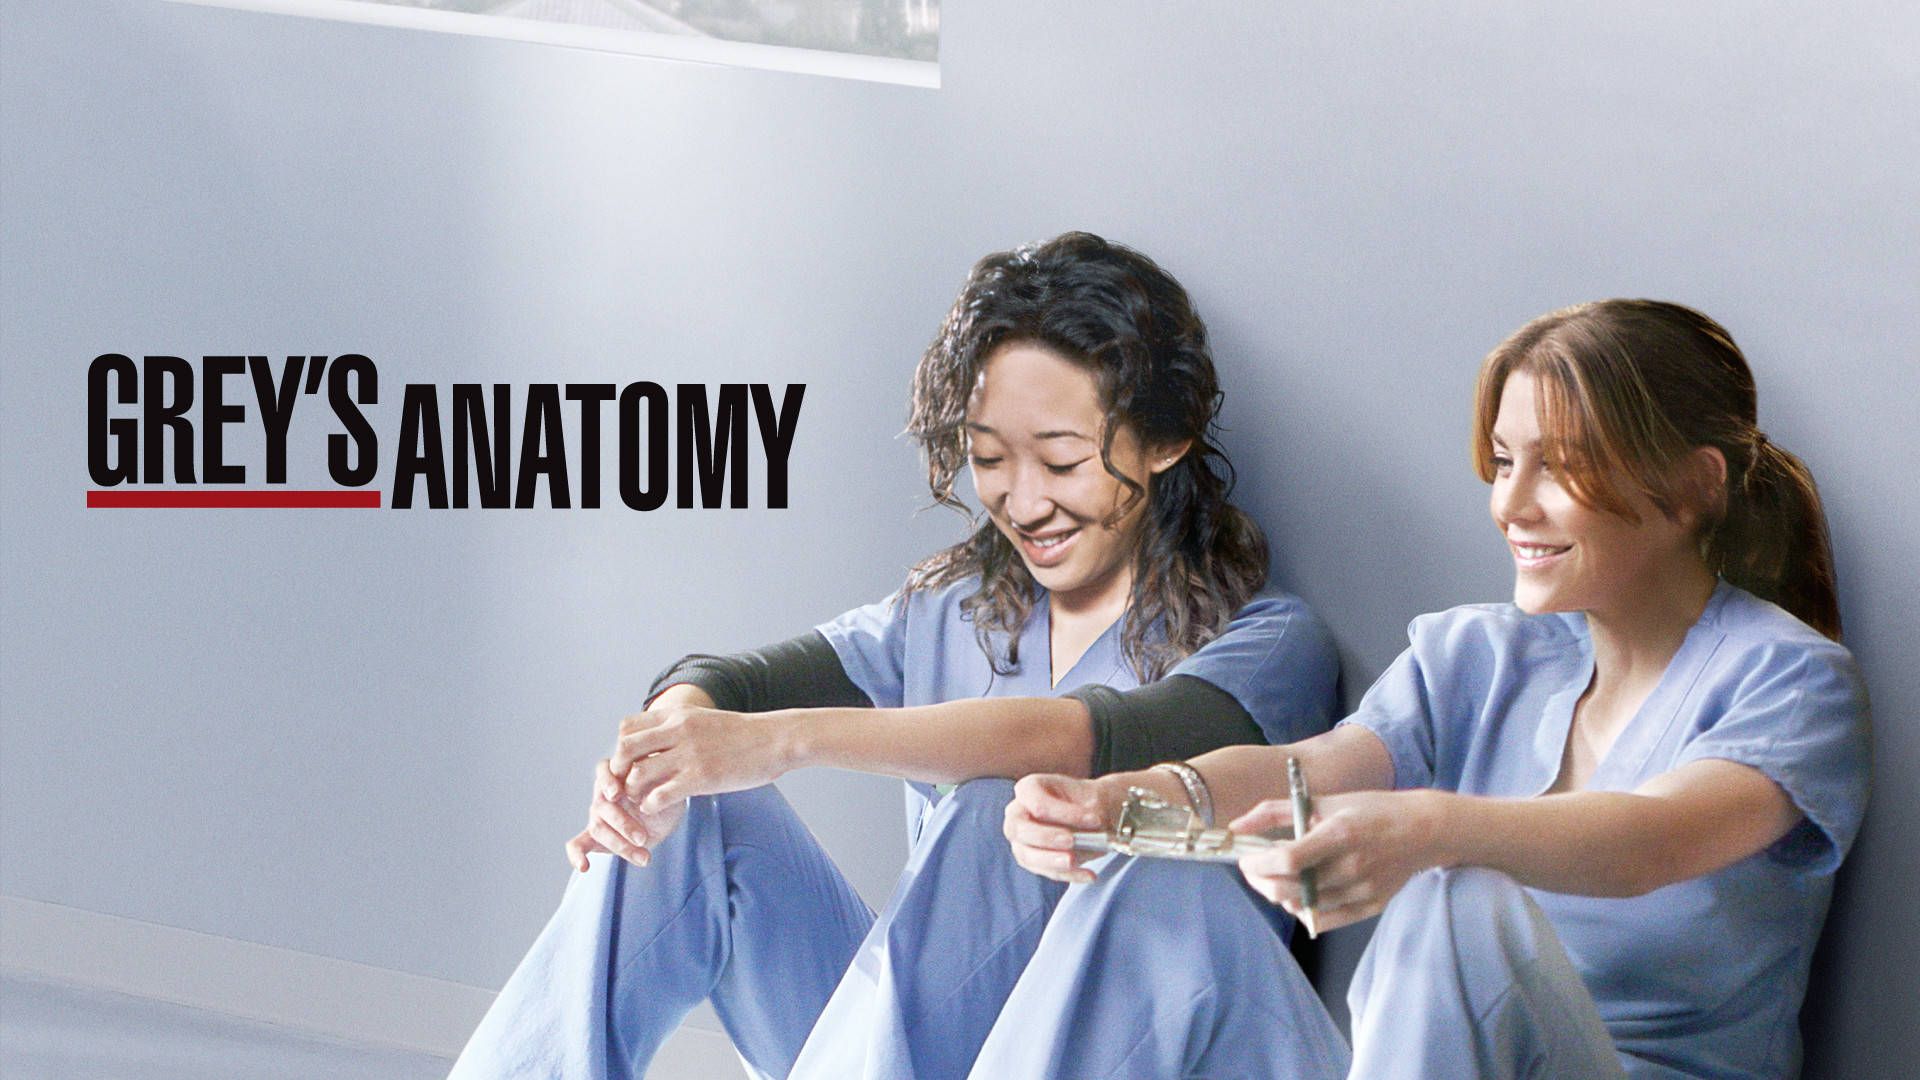 Free Grey's Anatomy Wallpaper Downloads, Grey's Anatomy Wallpaper for FREE